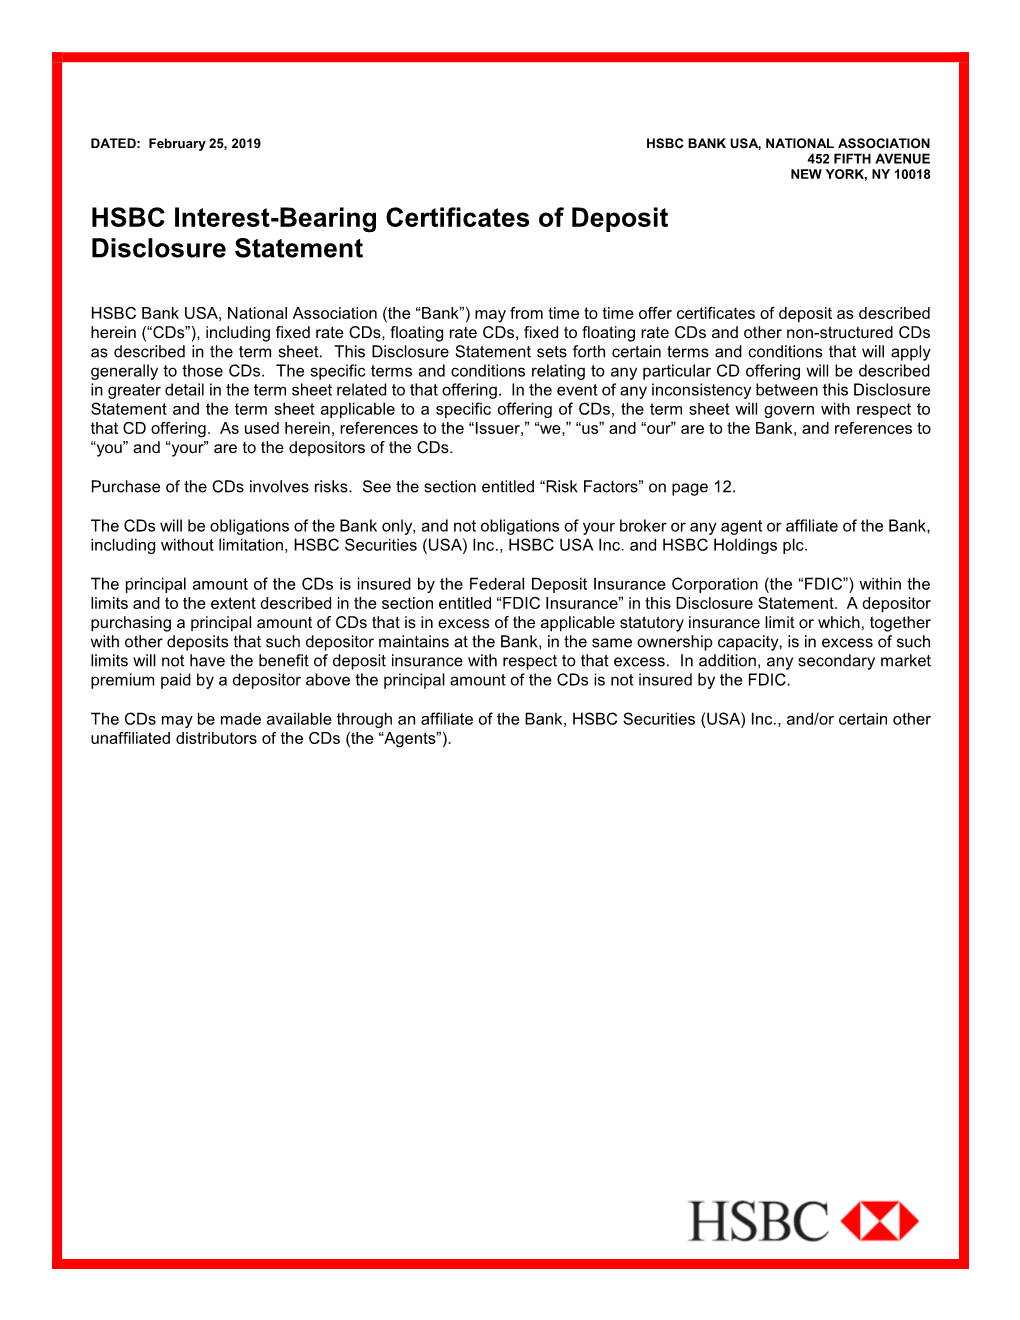 HSBC Interest-Bearing Certificates of Deposit Disclosure Statement